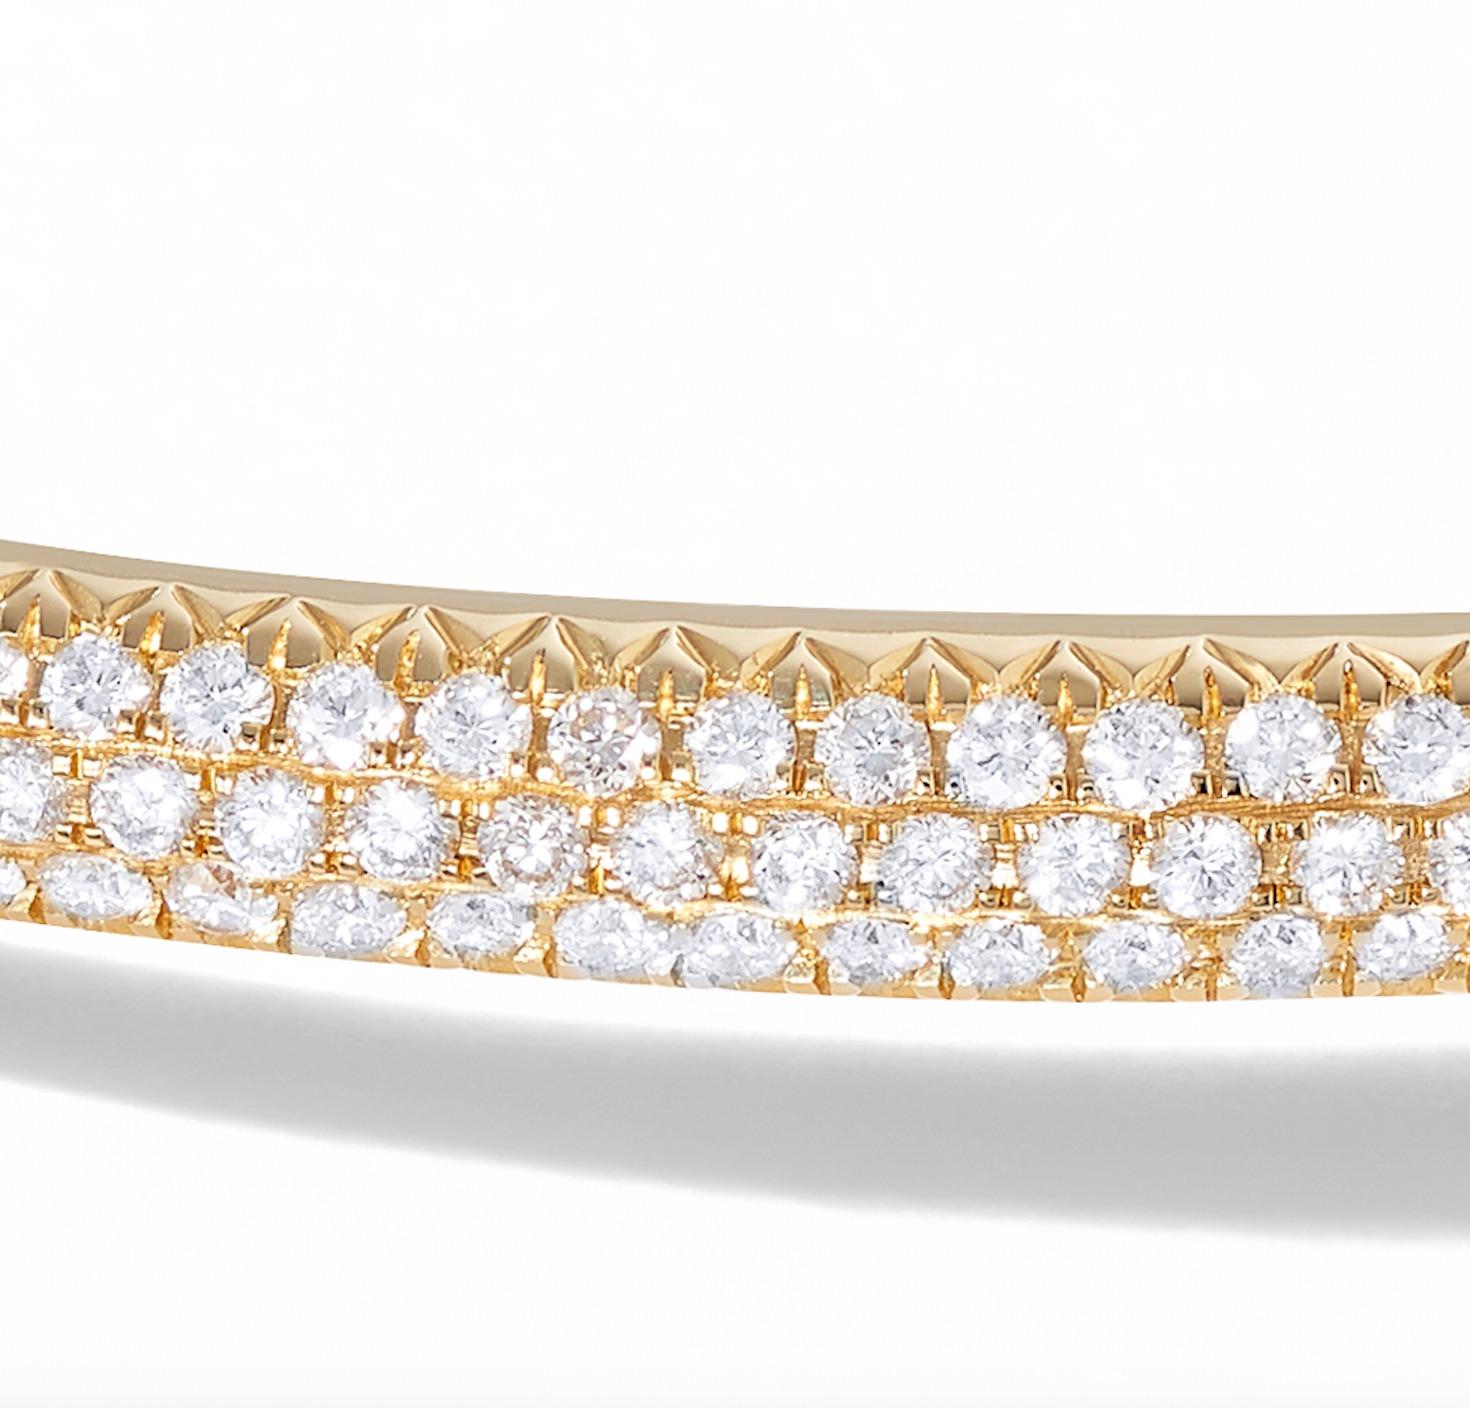 64Facets 2.75 Carat Pave Diamond Bangle Bracelet Set in 18 Karat Yellow Gold For Sale 4